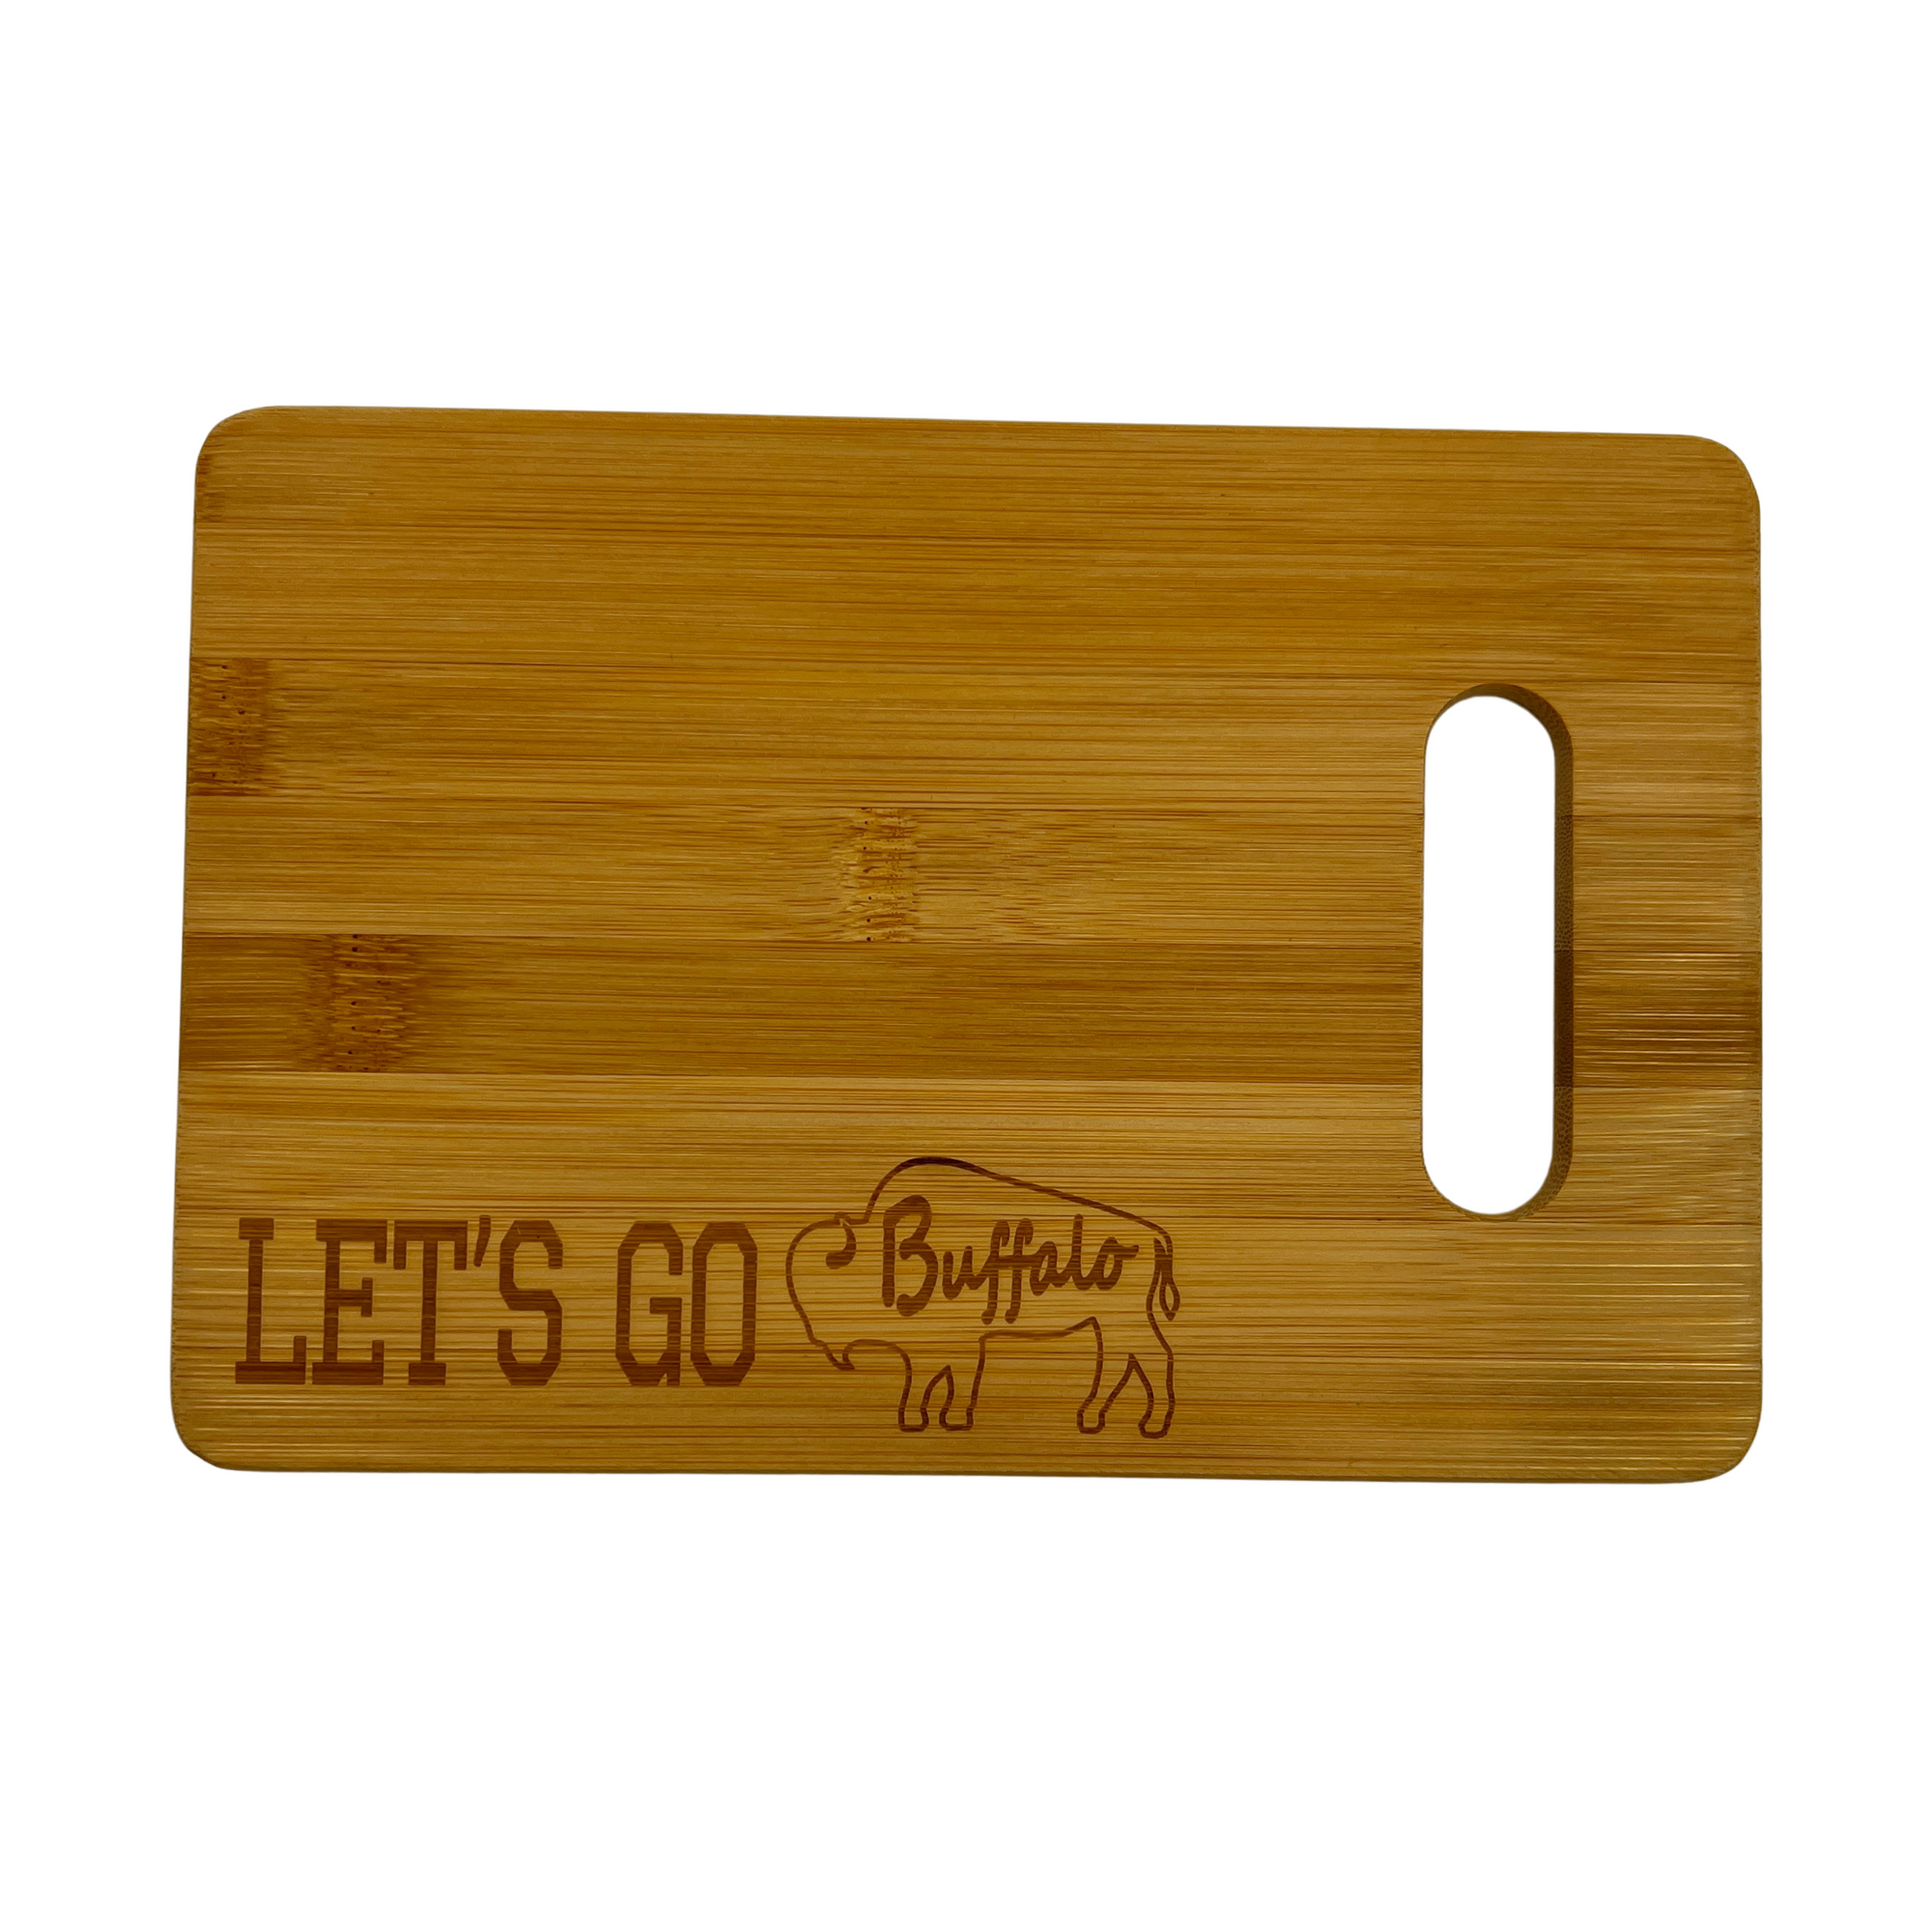 Let's Go Buffalo Small Bamboo Cutting Board